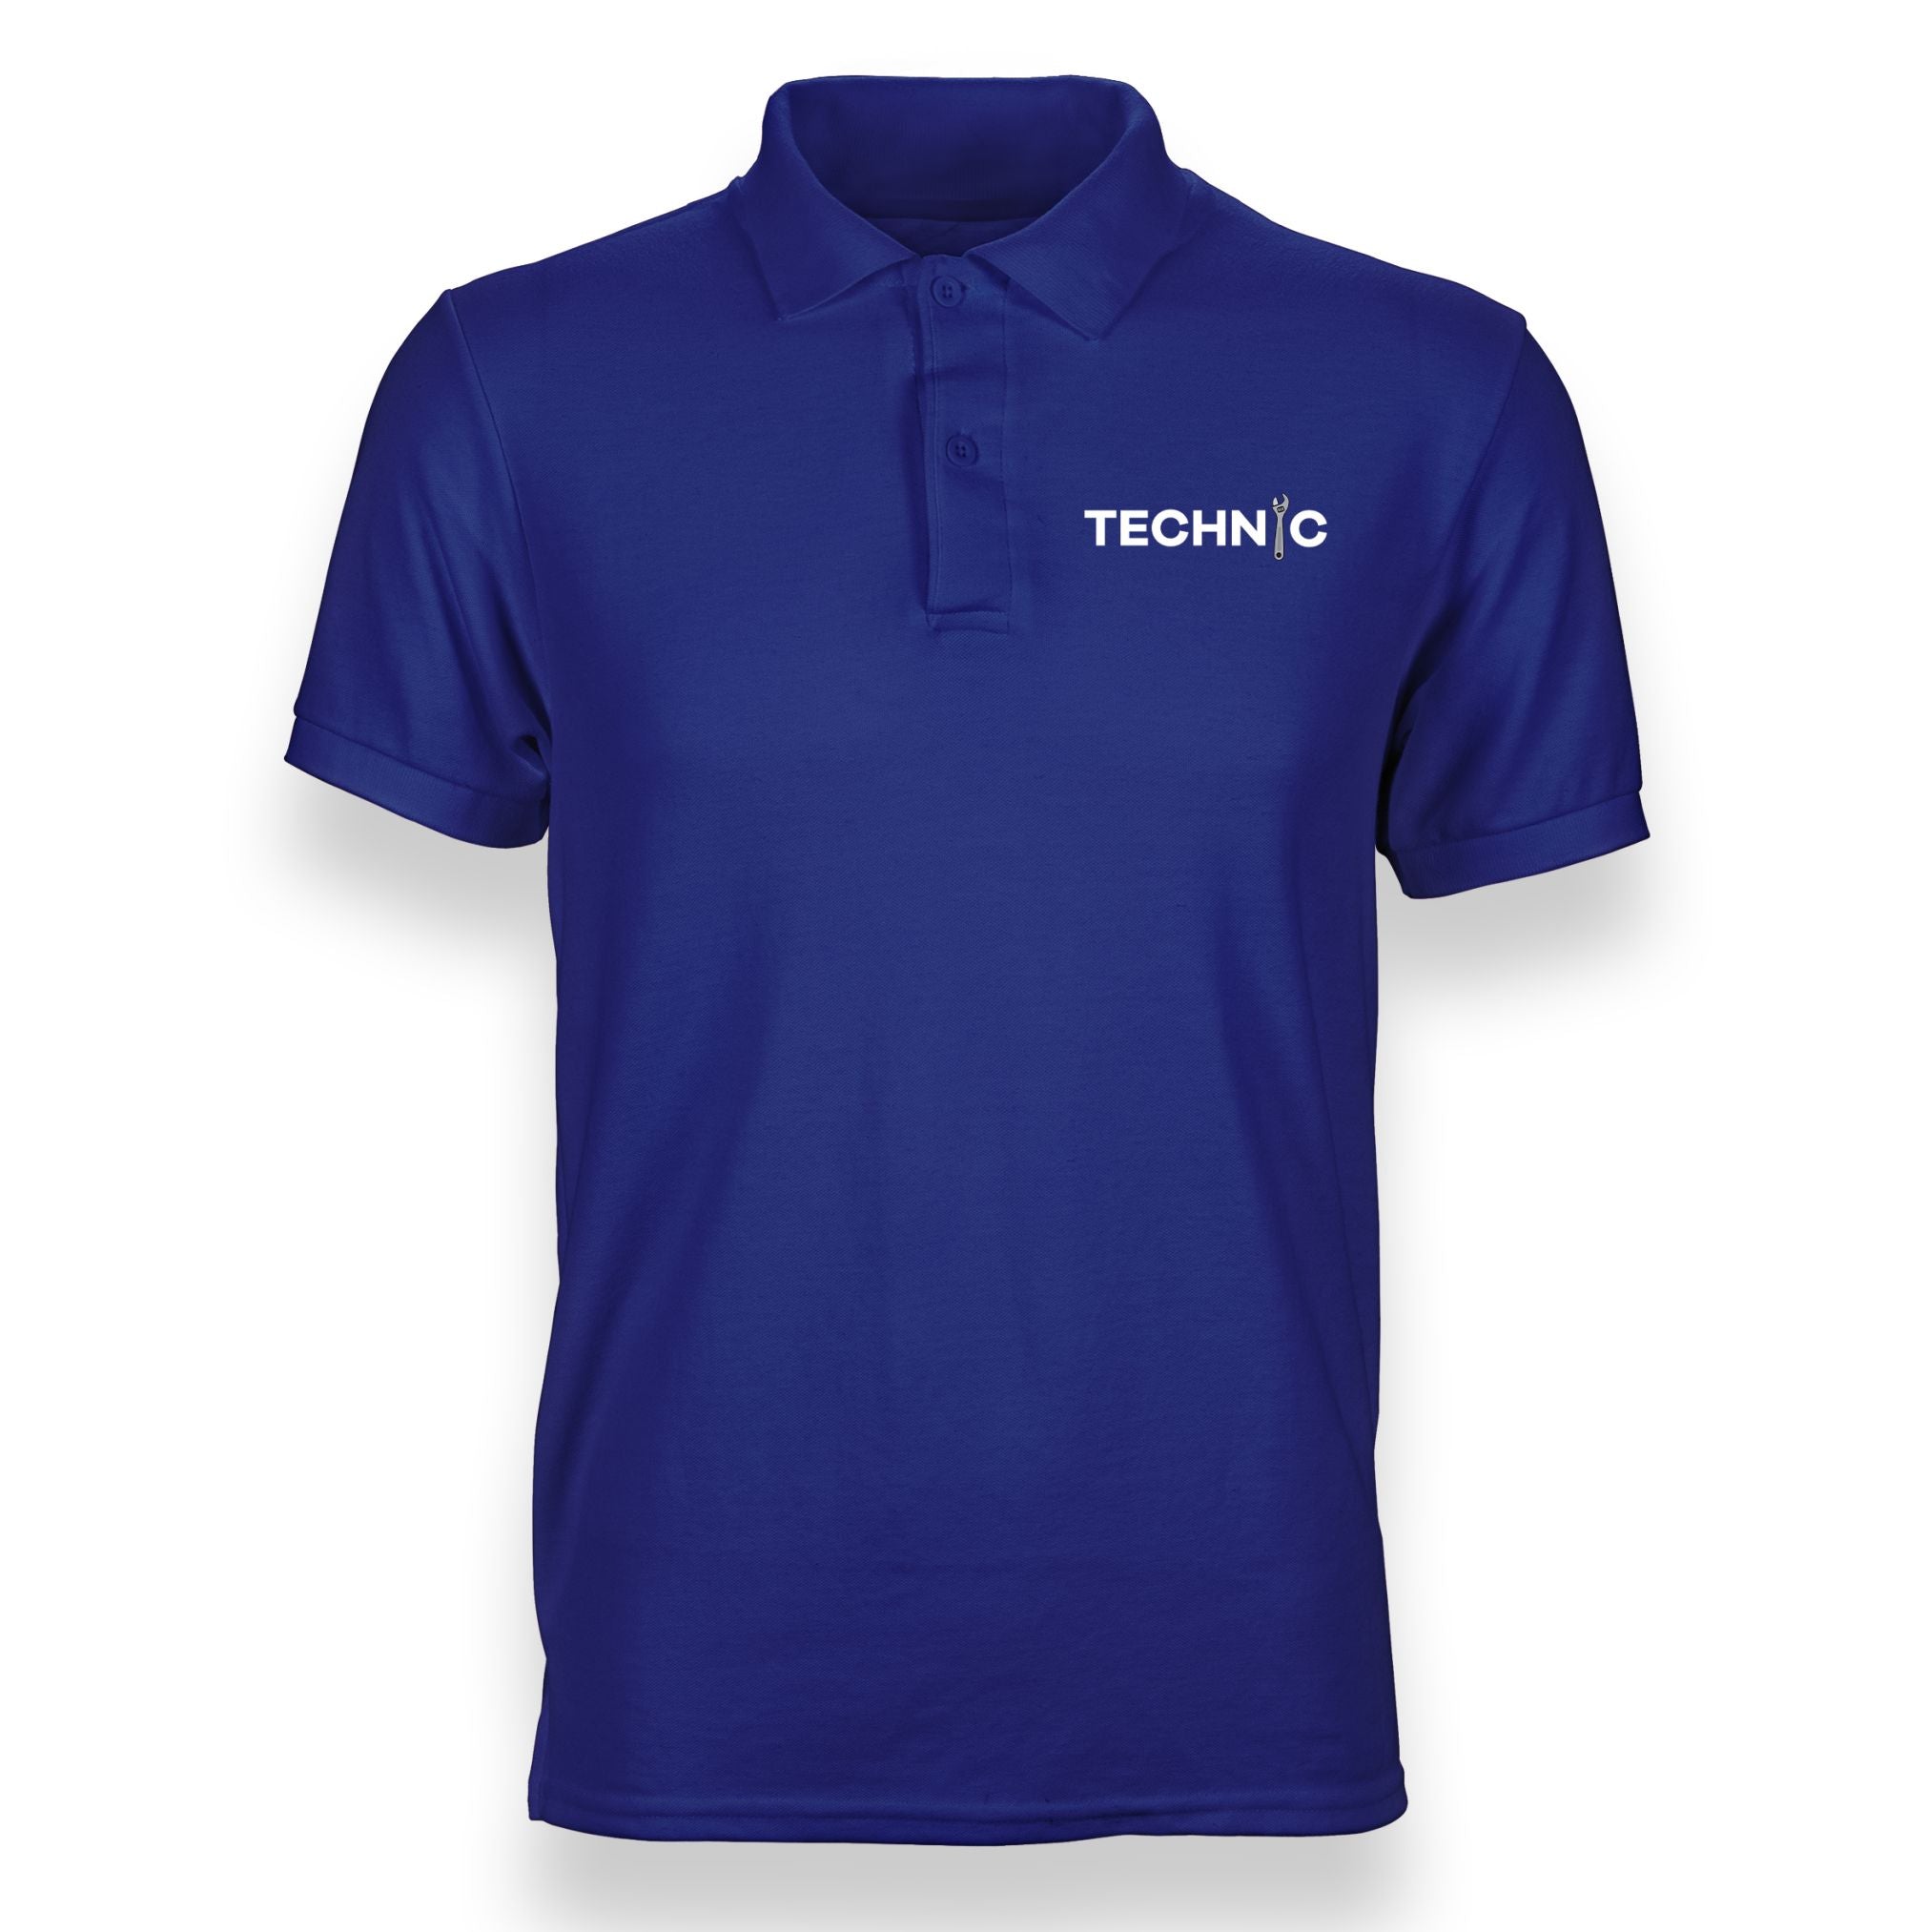 Technic Designed "WOMEN" Polo T-Shirts